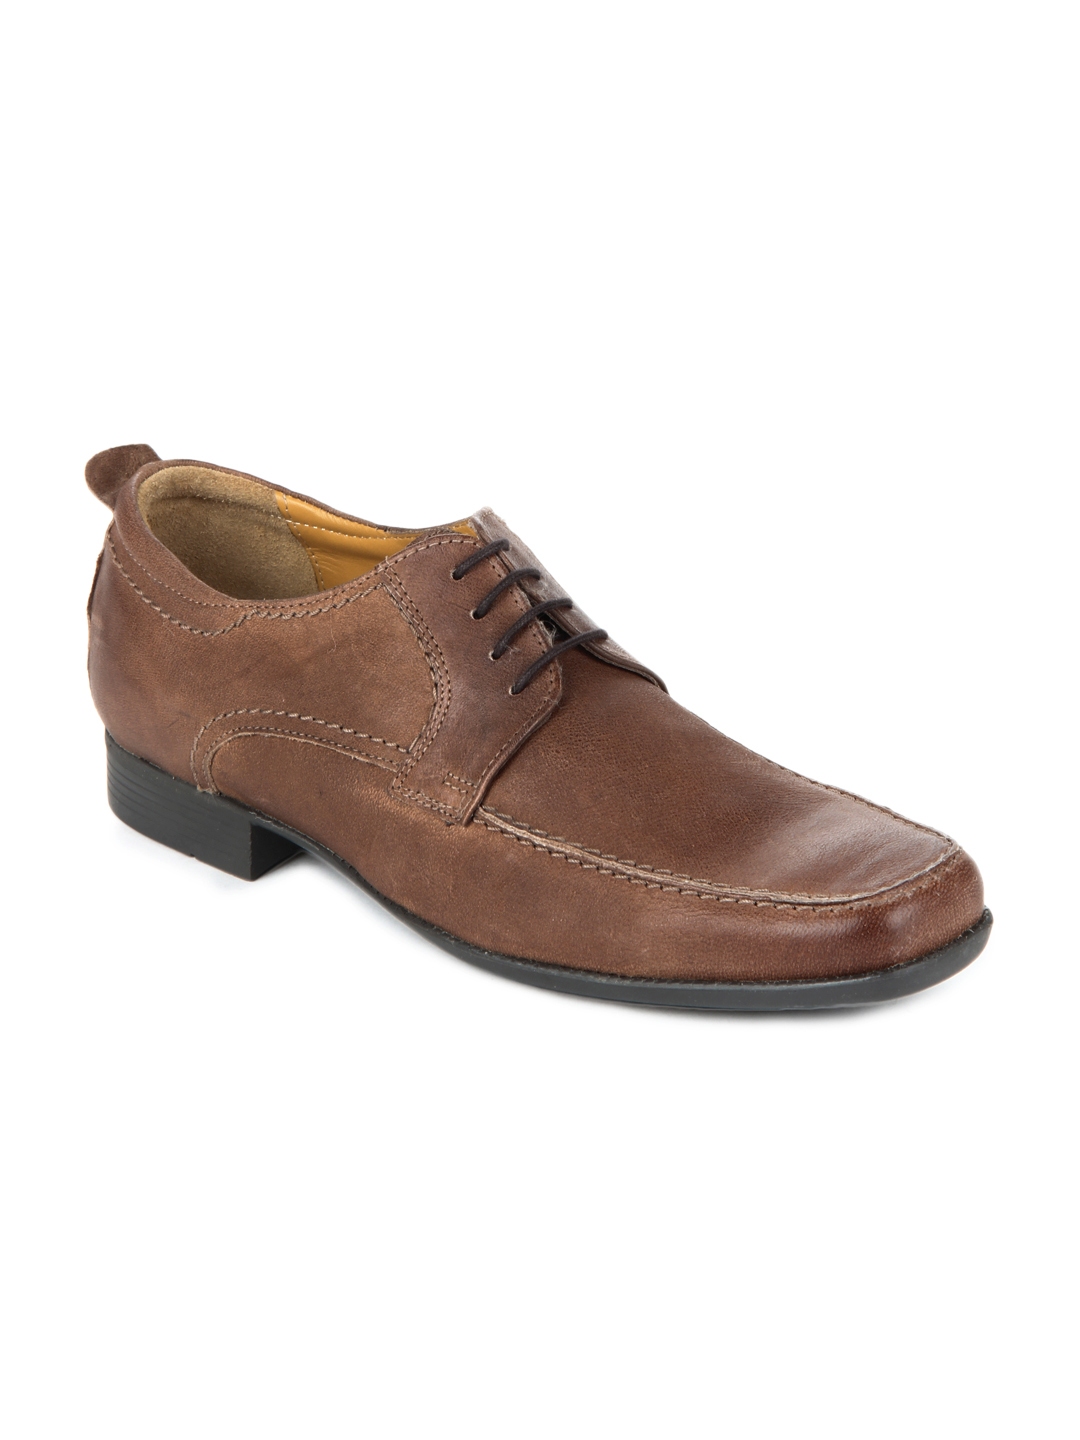 Buy Ruosh Work Semi Formal Men Tan Brown Leather Derby Shoes - Formal ...